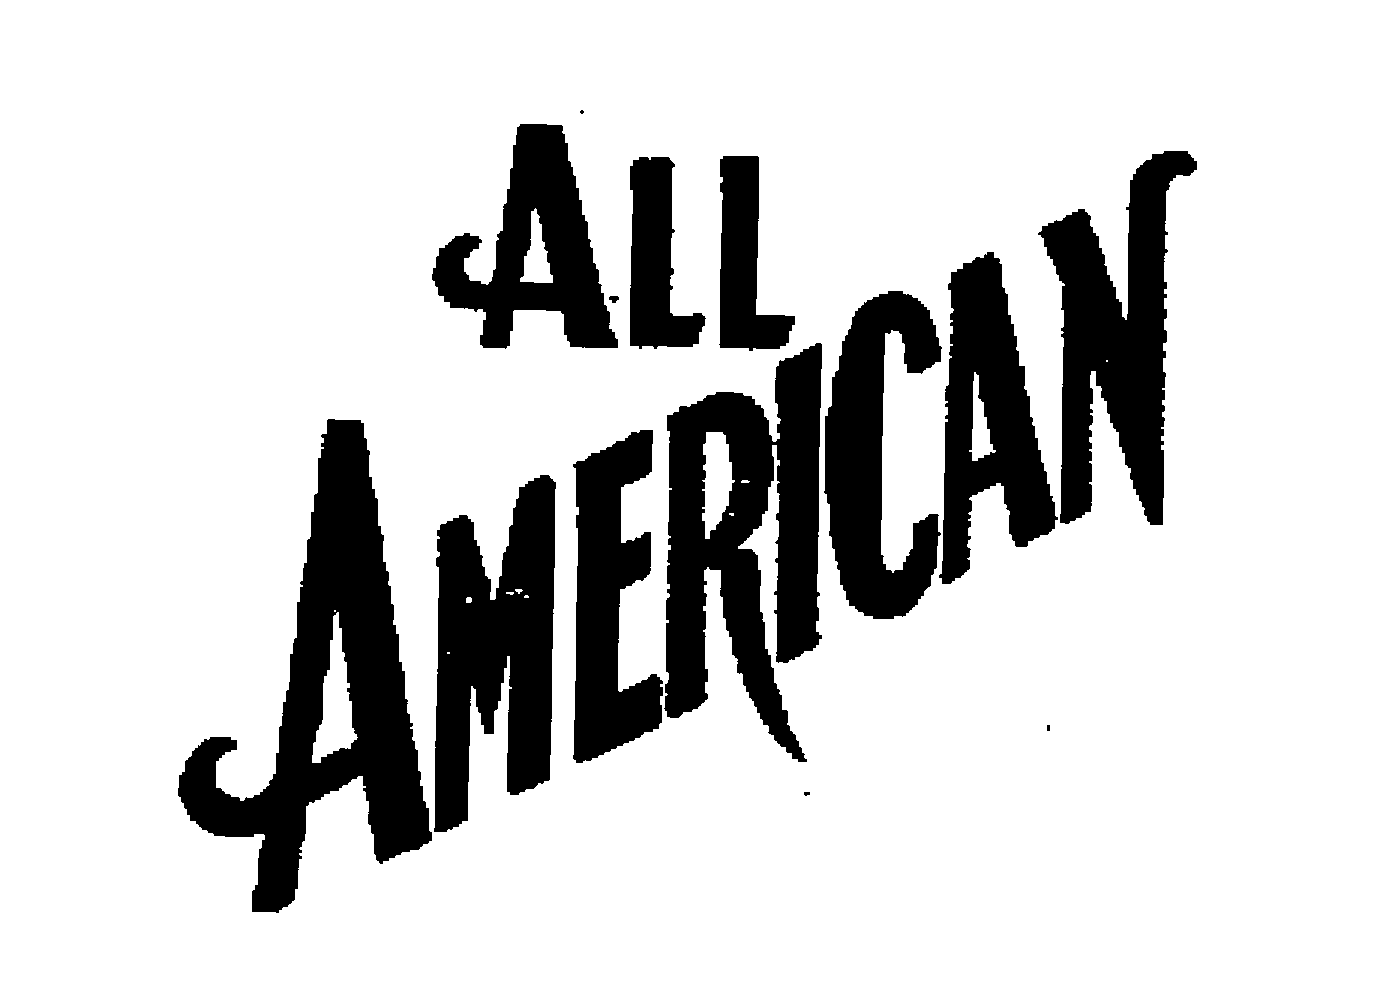 Trademark Logo ALL AMERICAN